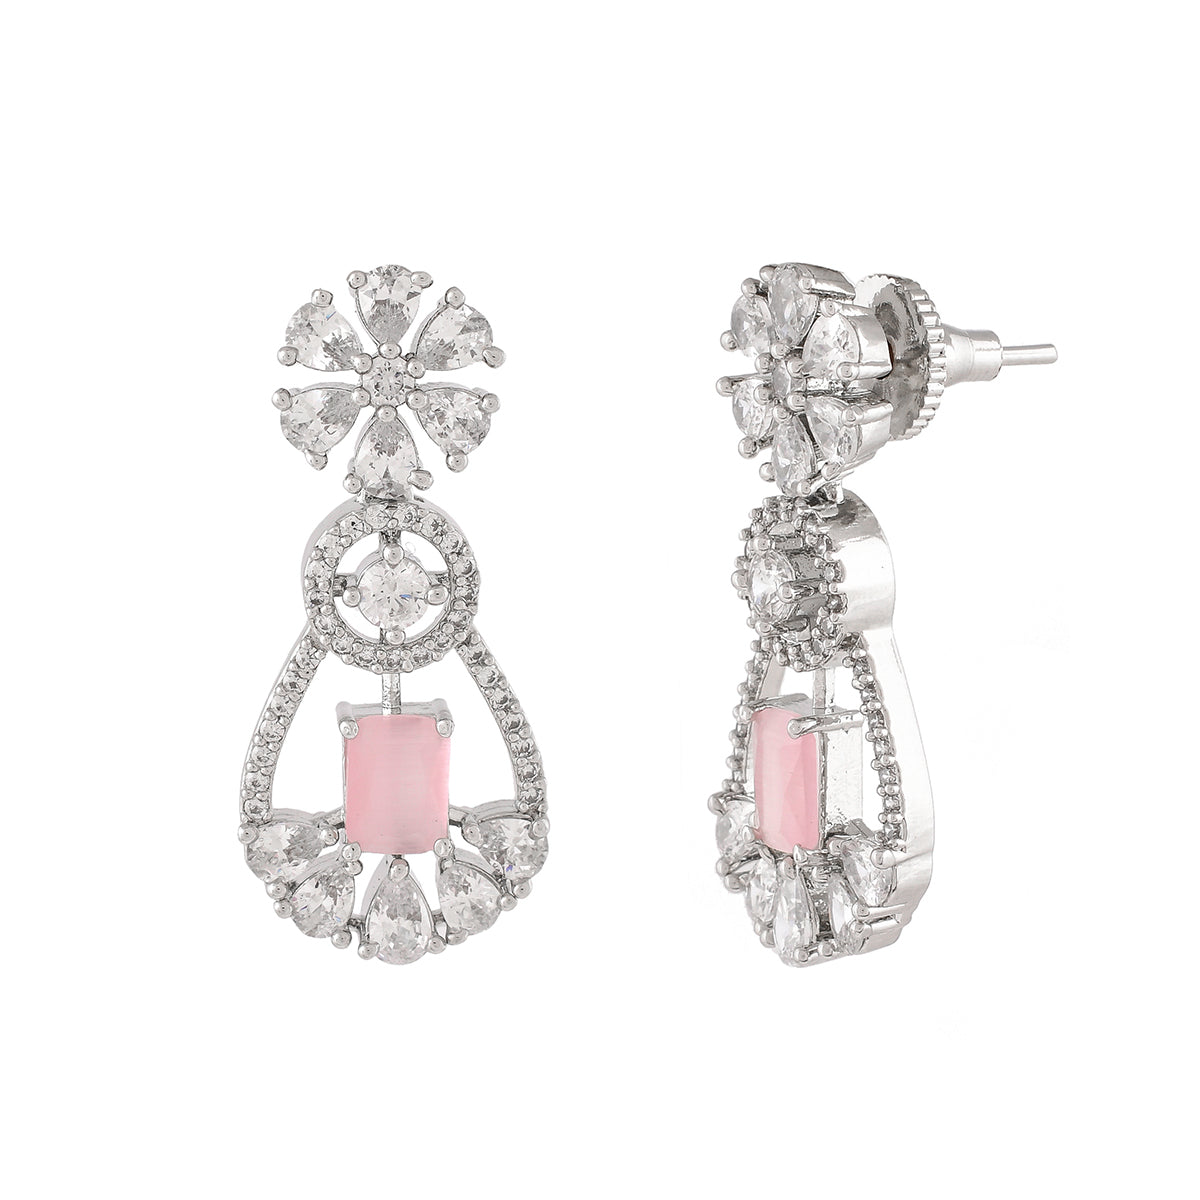 Sparkling Elegance Pale Pink Square Cut CZ Dangler Earrings